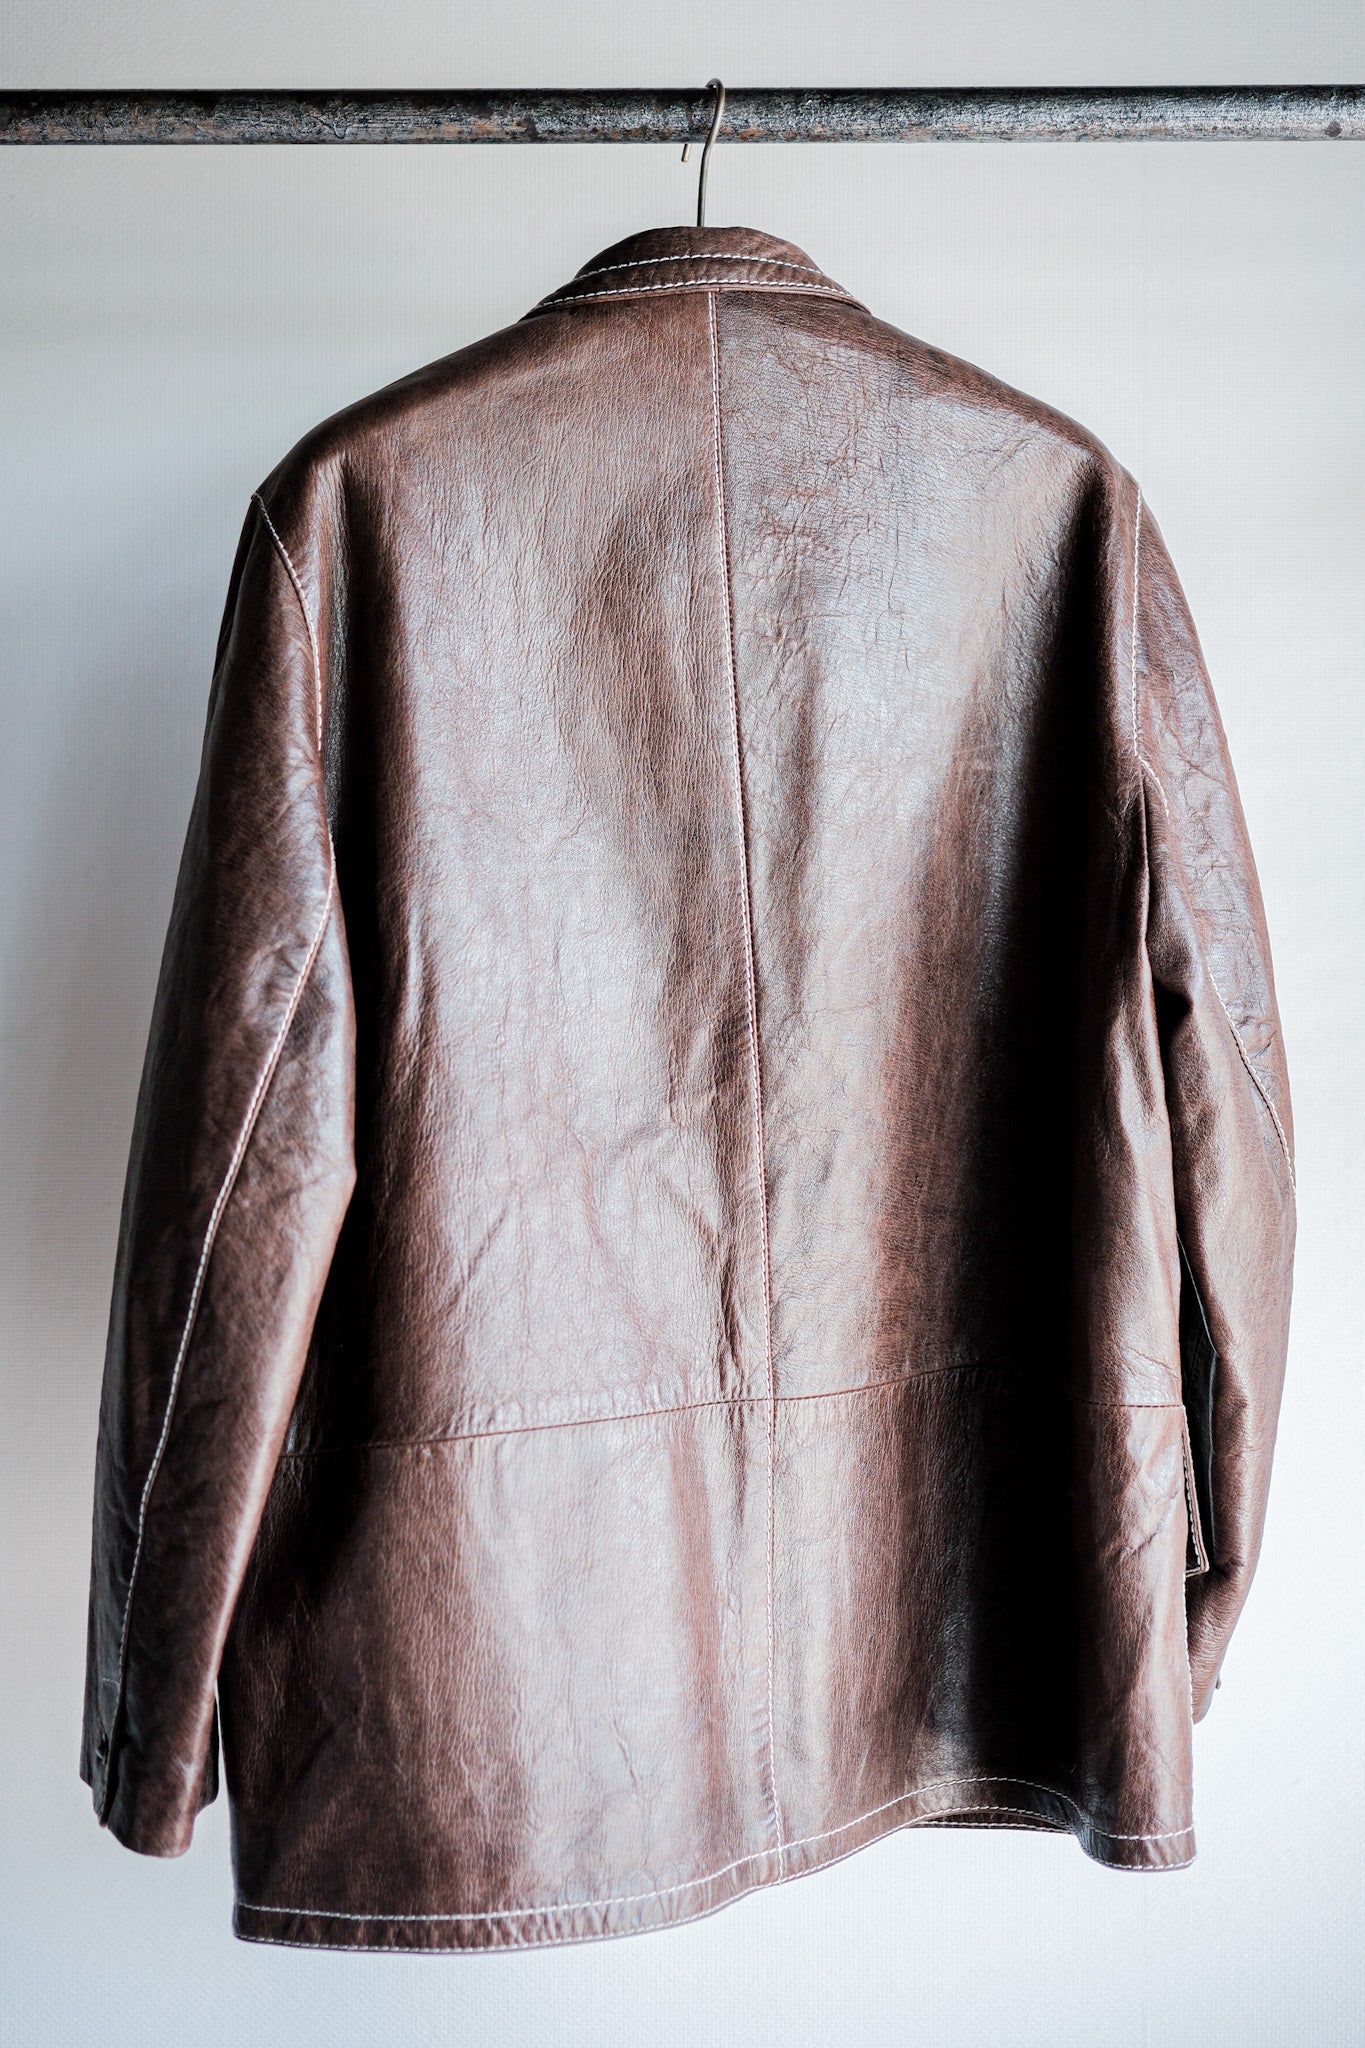 [~ 90's] Old Anne Marie Beretta en cuir de la veste.T42